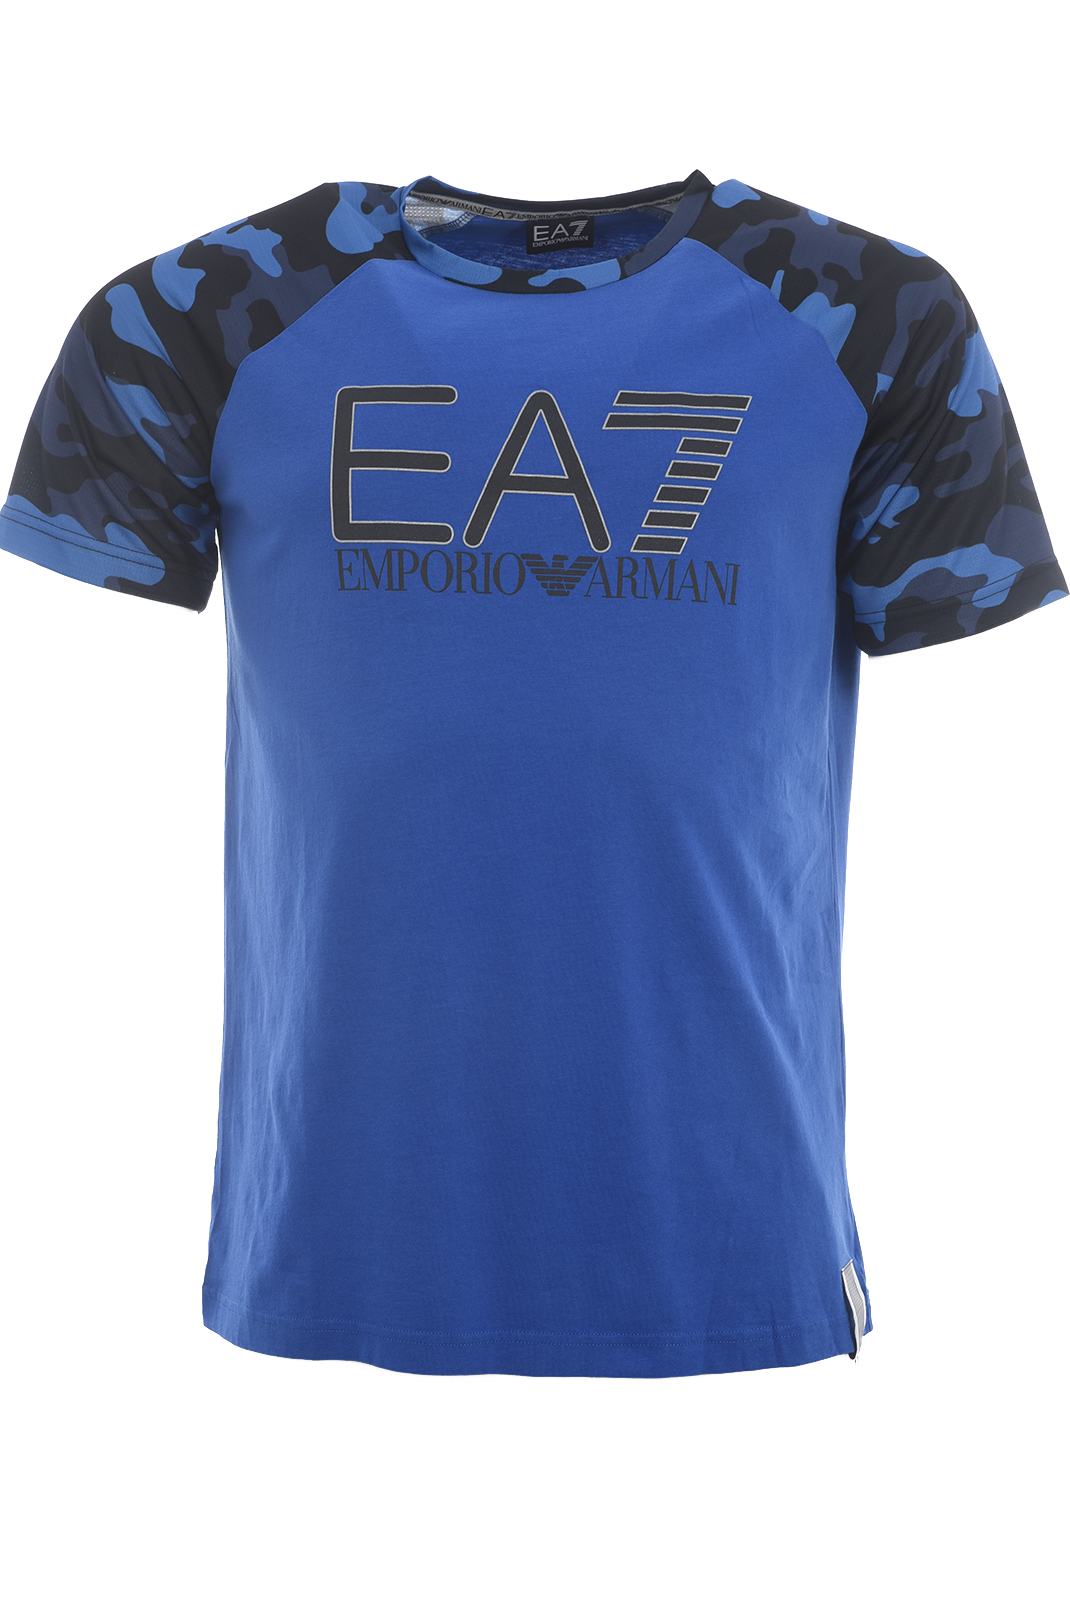 Emporio Armani Tee-shirt Bleu Royal À Manches Courtes 3ypti1 Pjd8z